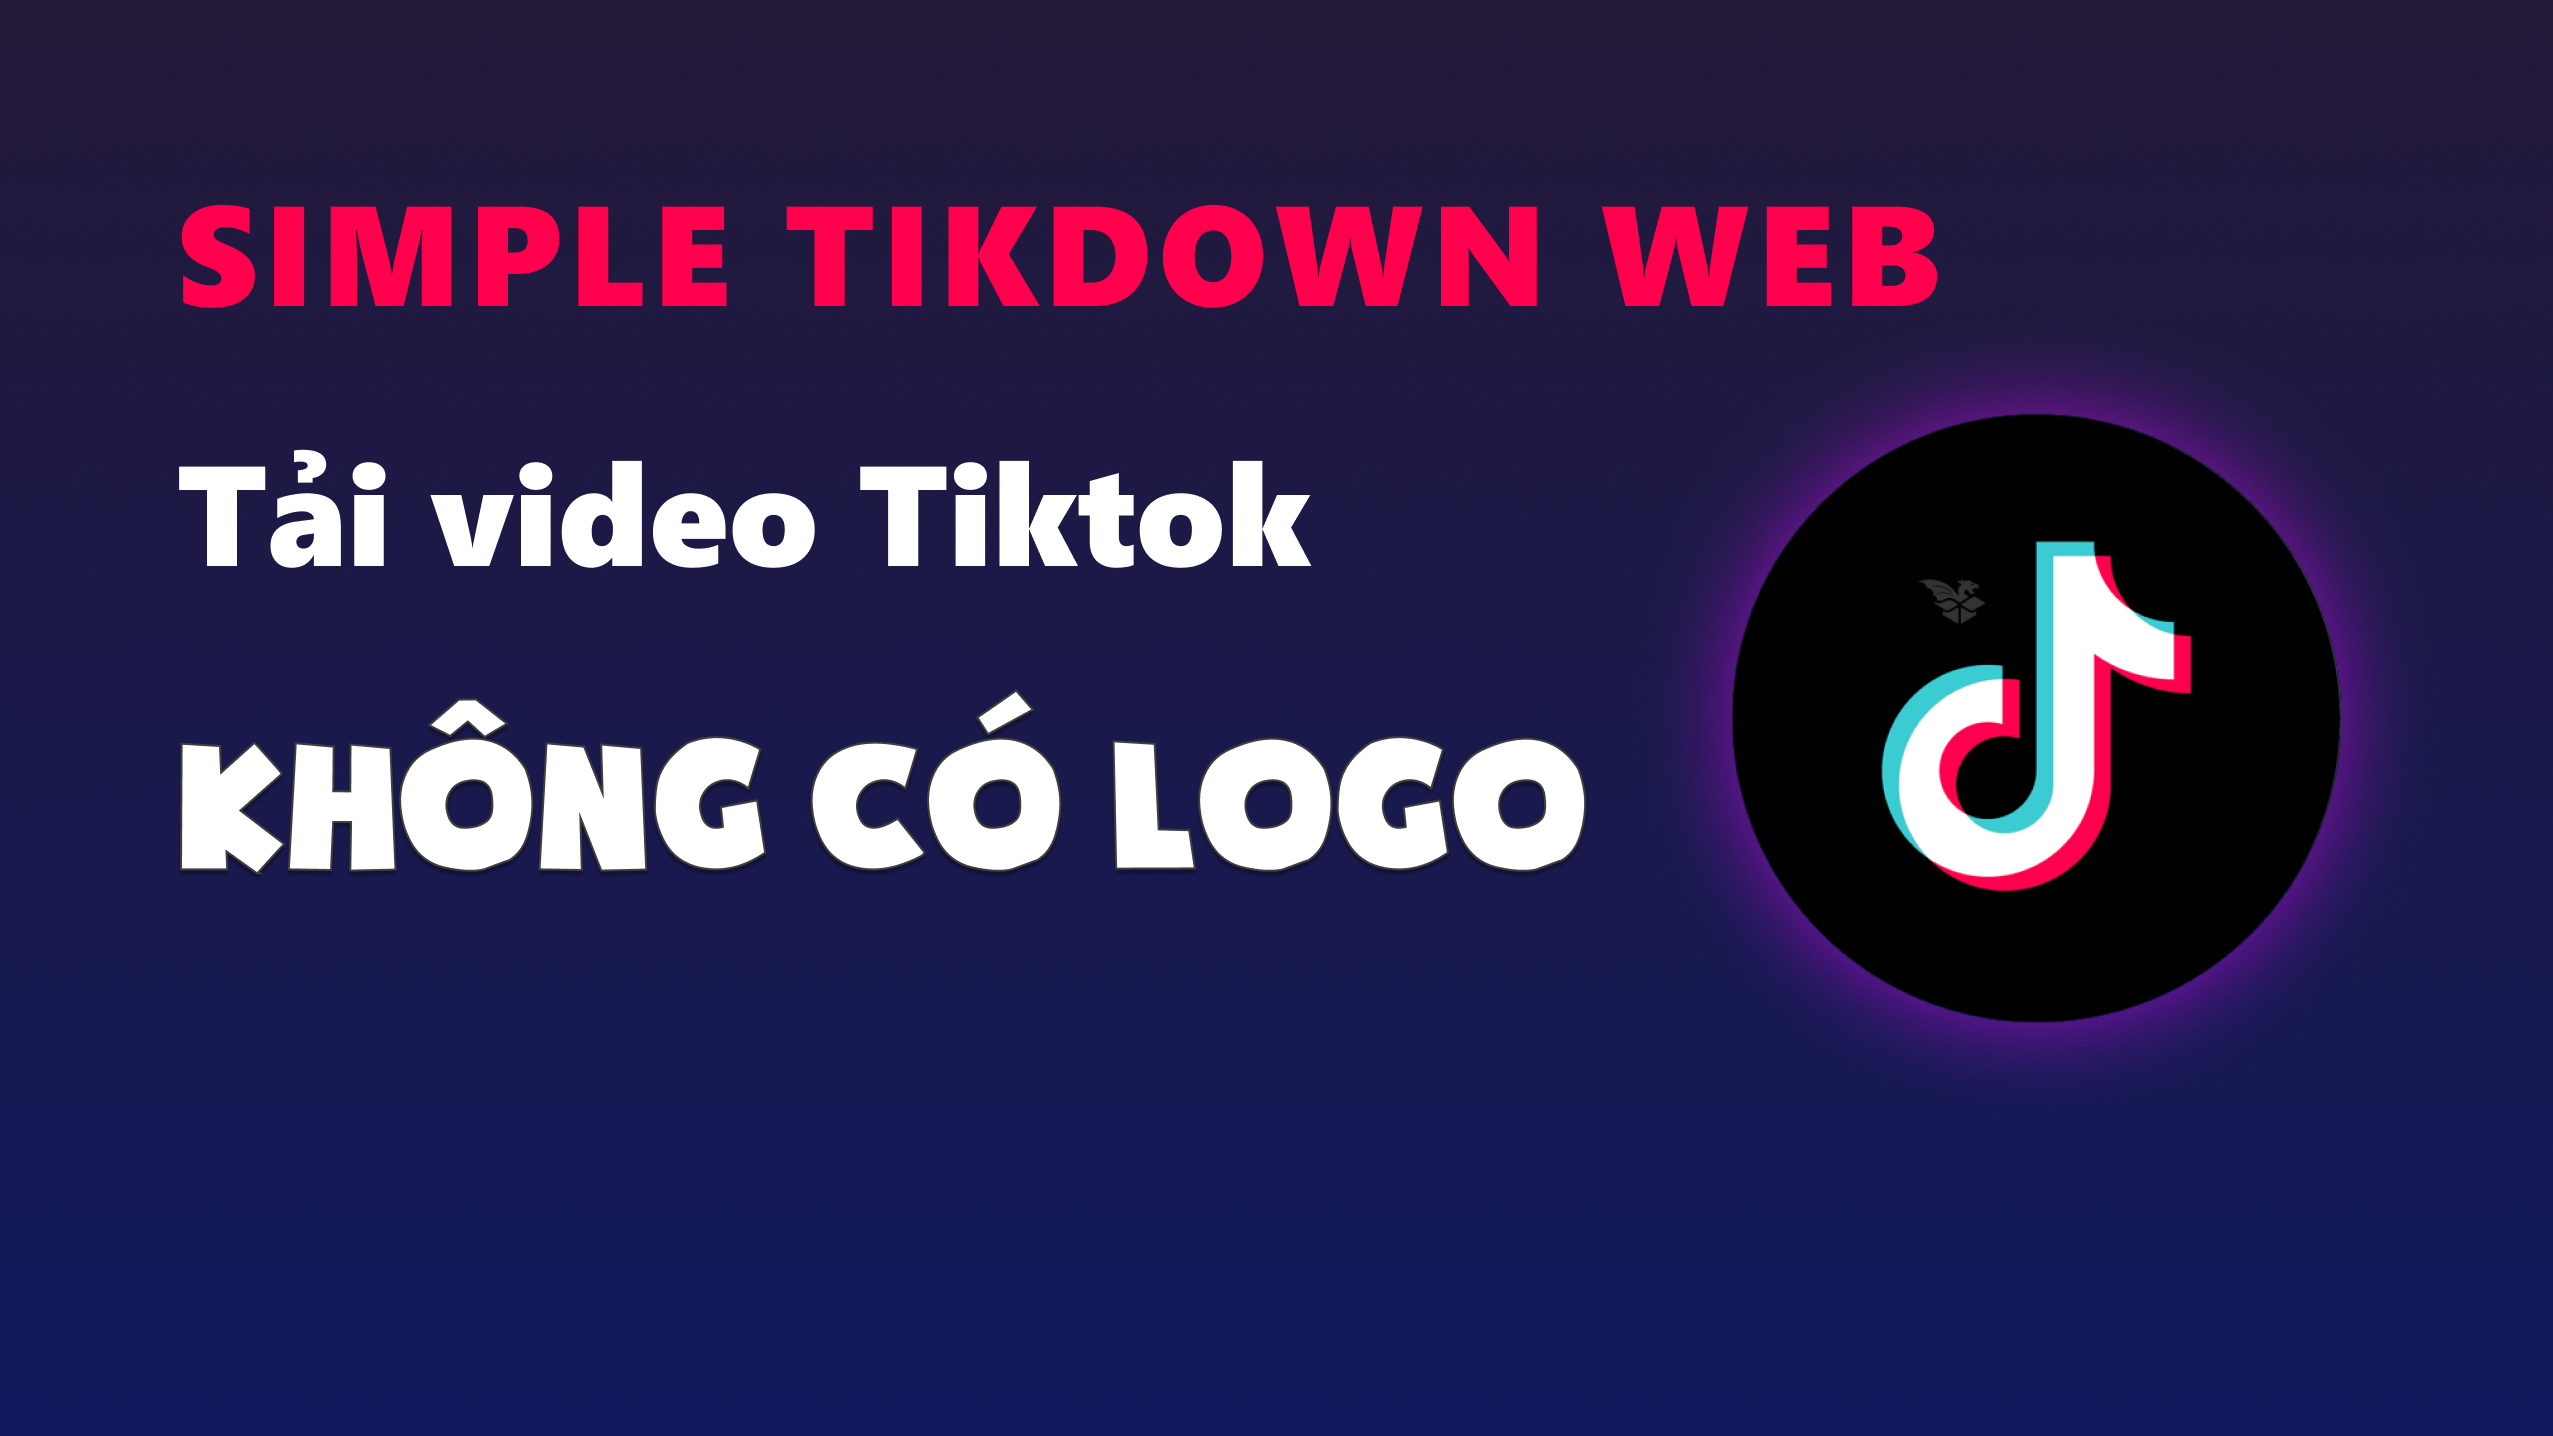 Simple Tikdown Web - Tải video Tiktok không có logo | ATP Software